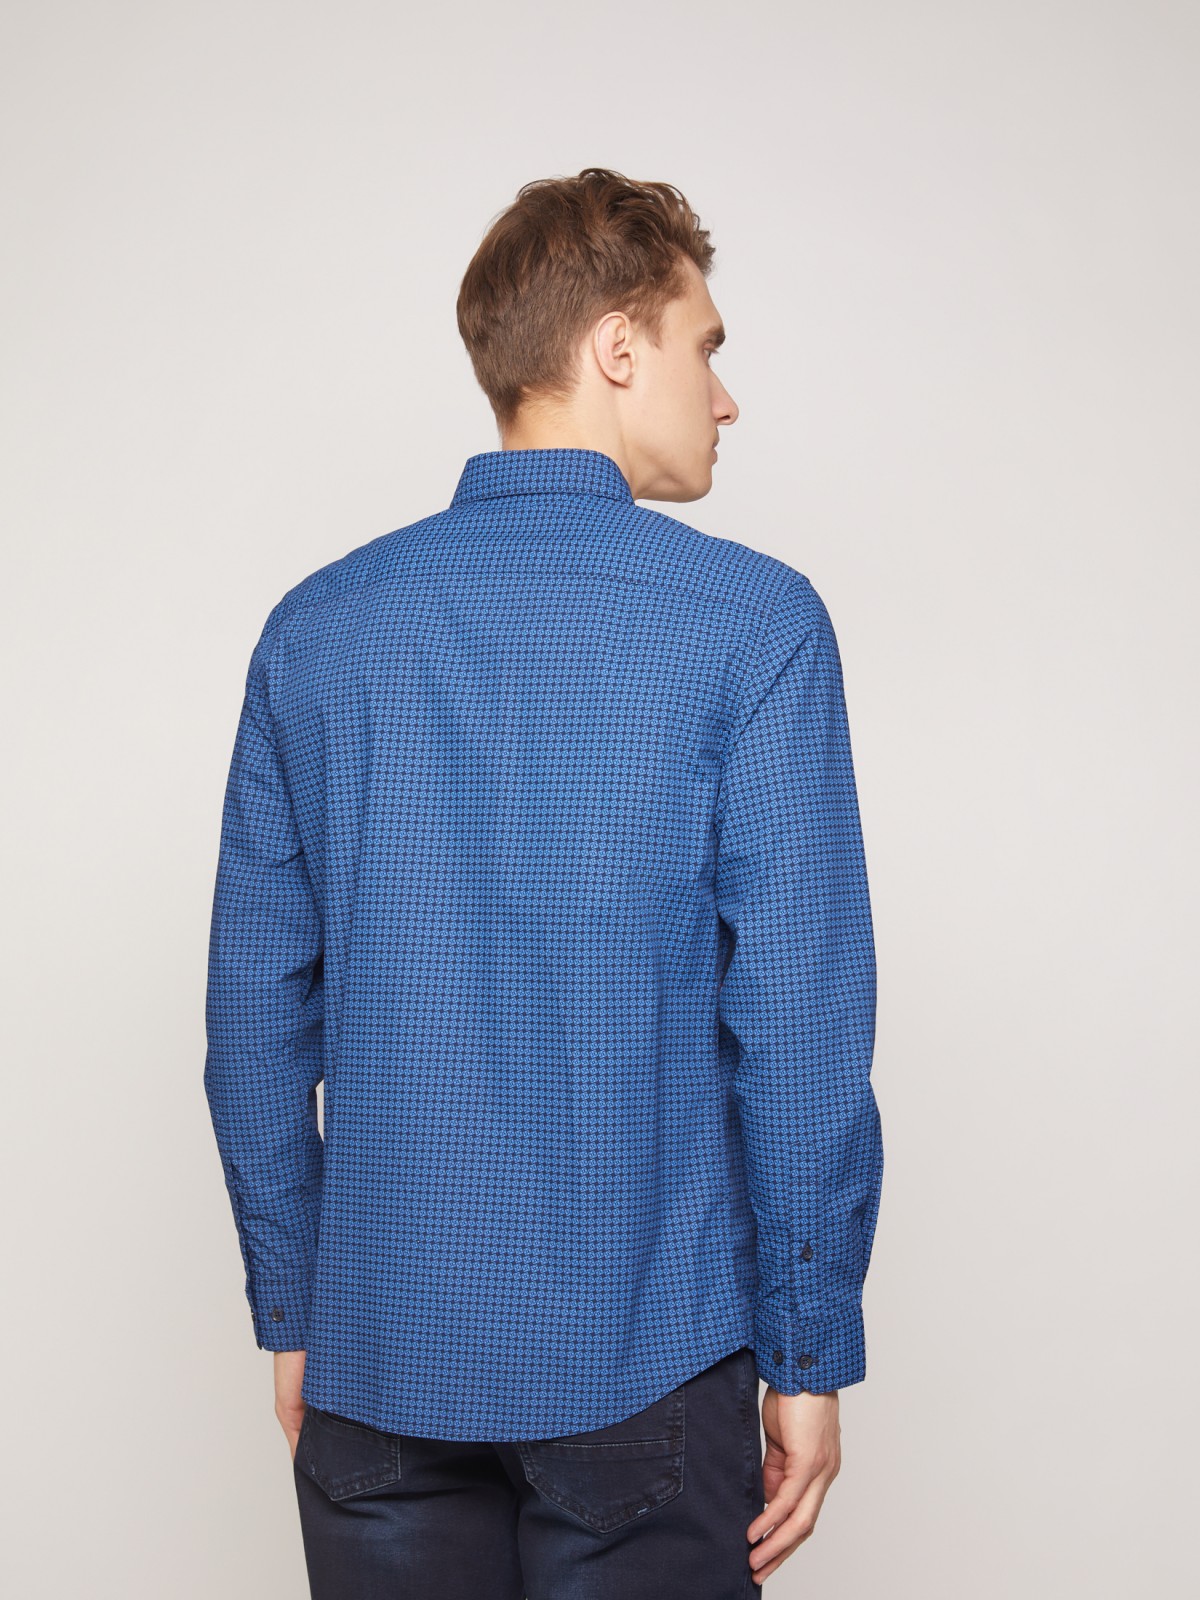 Рубашка с микро орнаментом zolla 011332106073, цвет голубой, размер M - фото 6